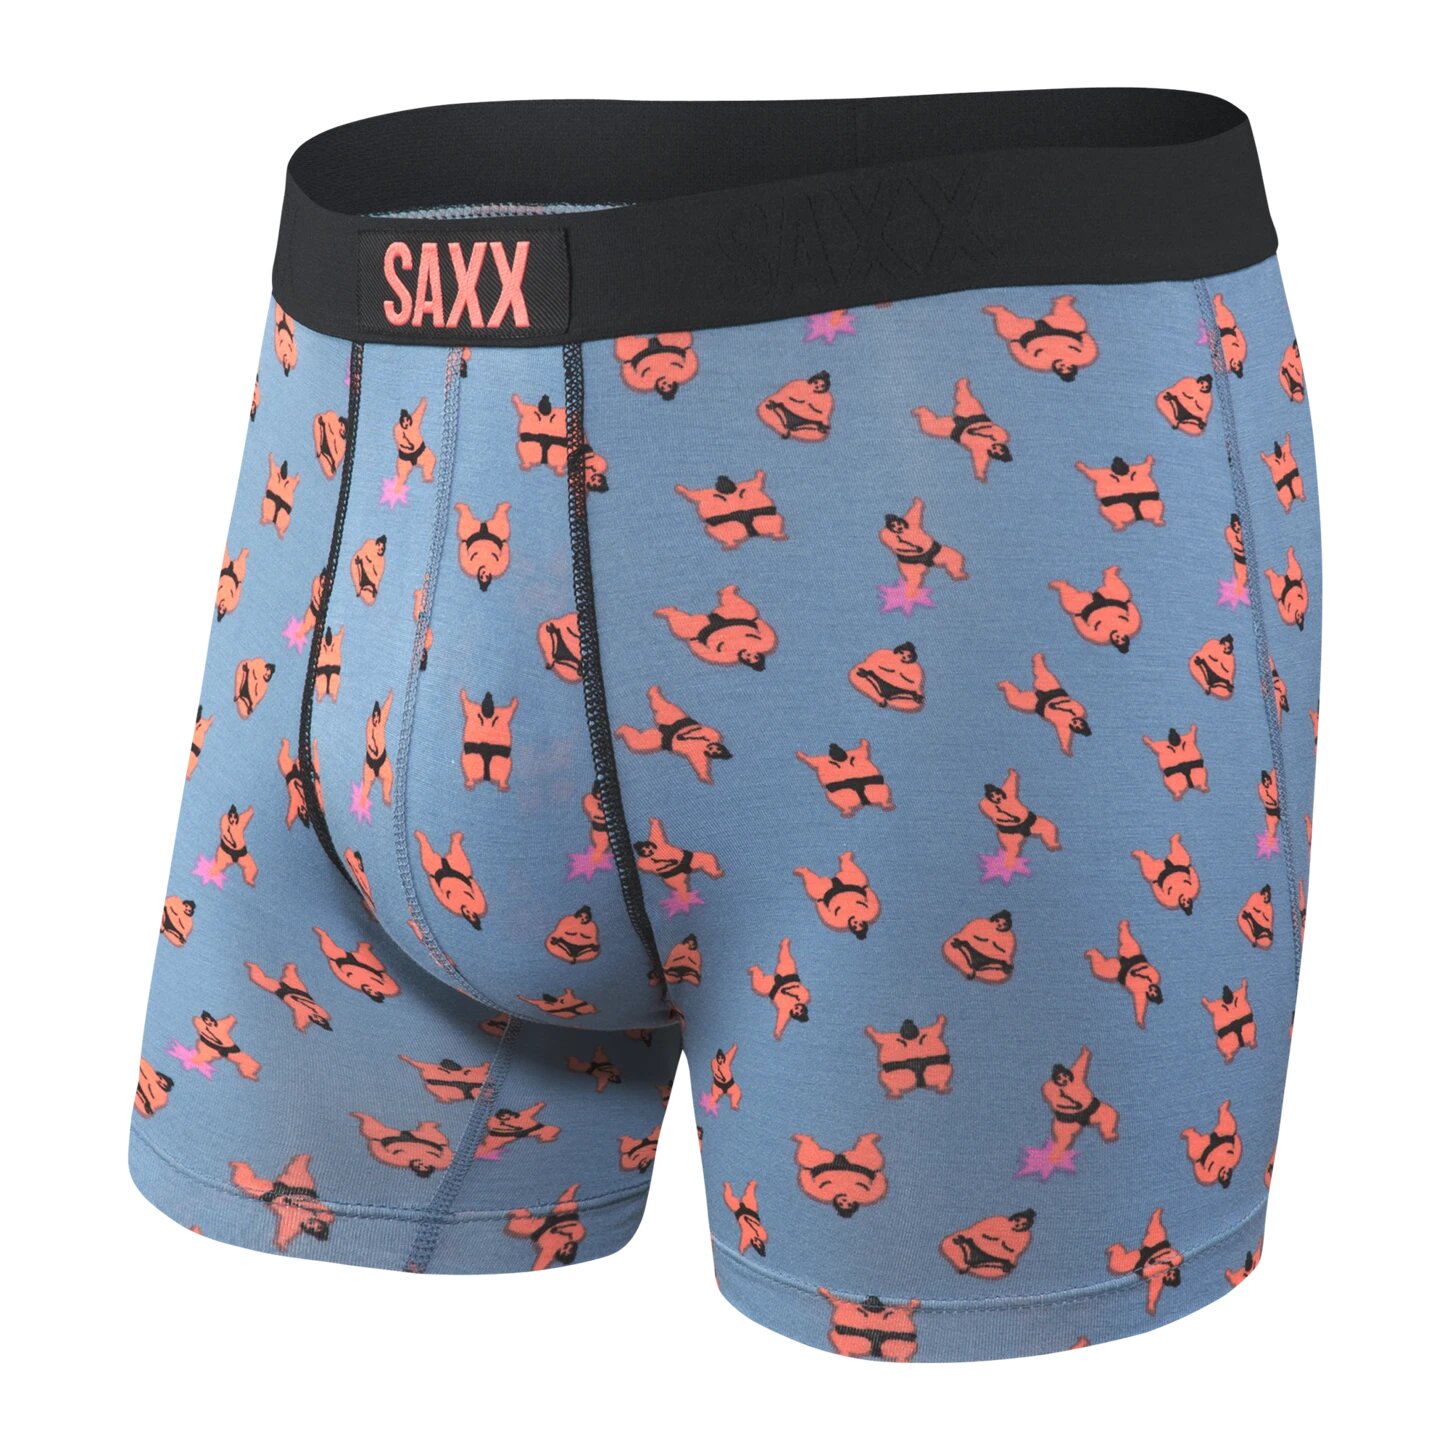 SAXX Saxx Vibe Boxer Brief | Pants Drunk-Grey Heather